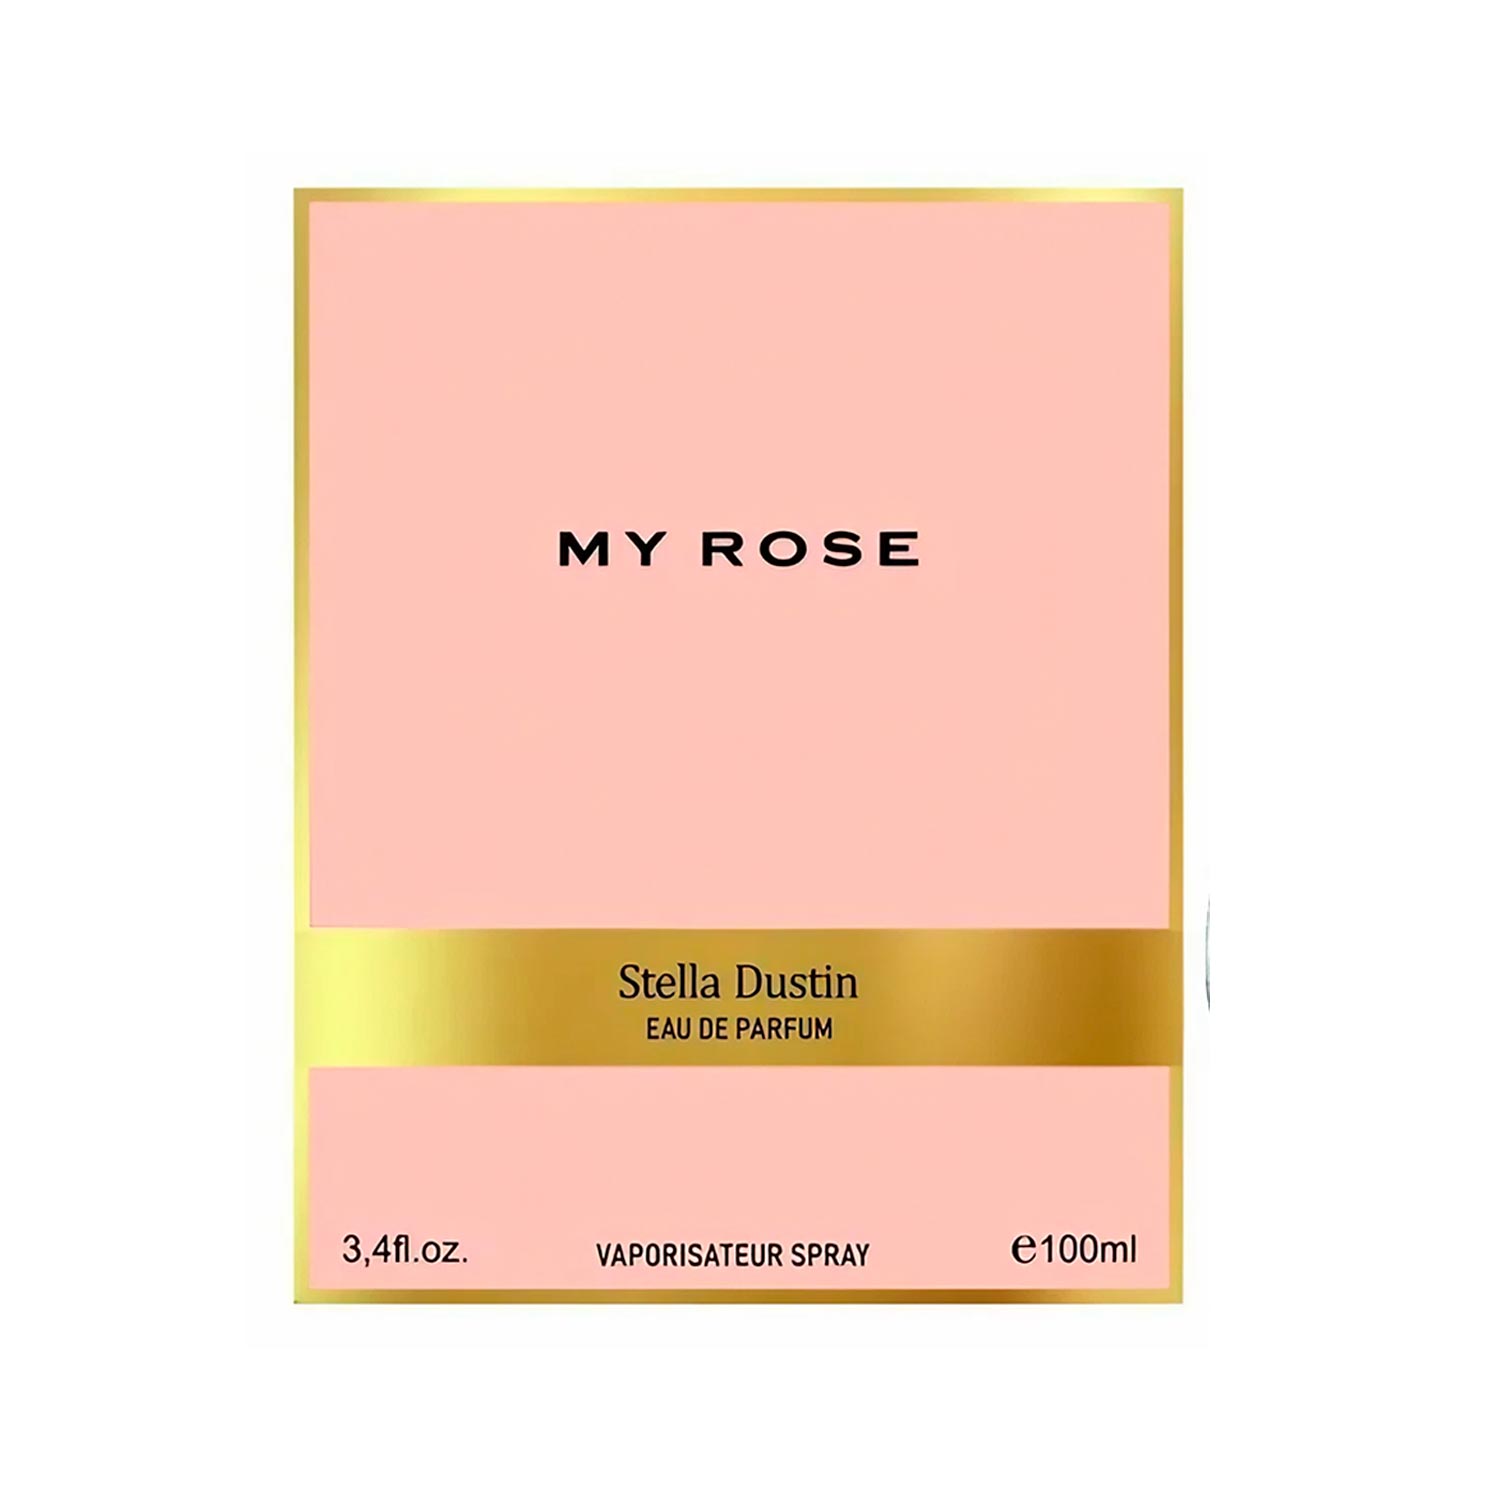 Perfume Stella Dustin My Rose Eau de Parfum Feminino 100ml